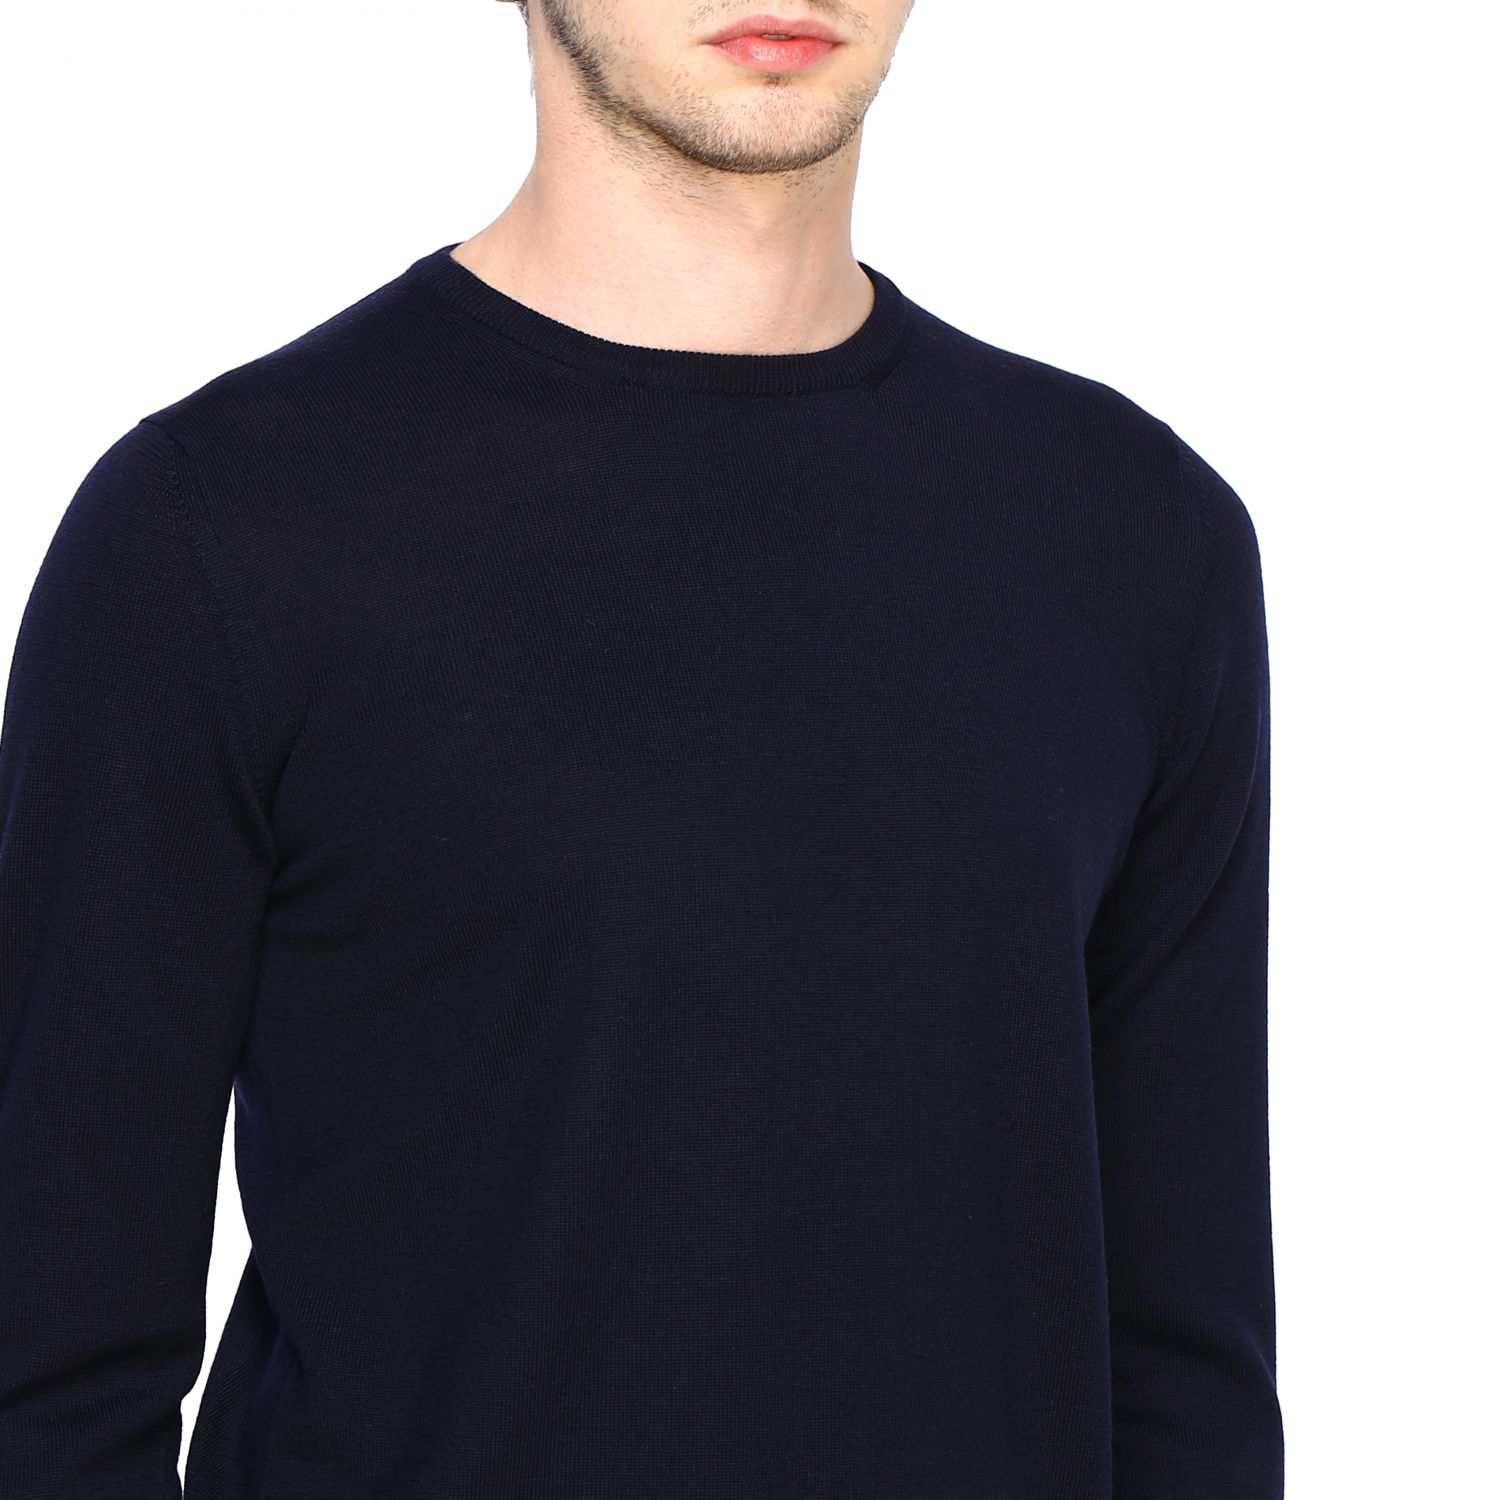 Gran Sasso Outlet: Sweatshirt men - Blue | Sweatshirt Gran Sasso 55167 ...